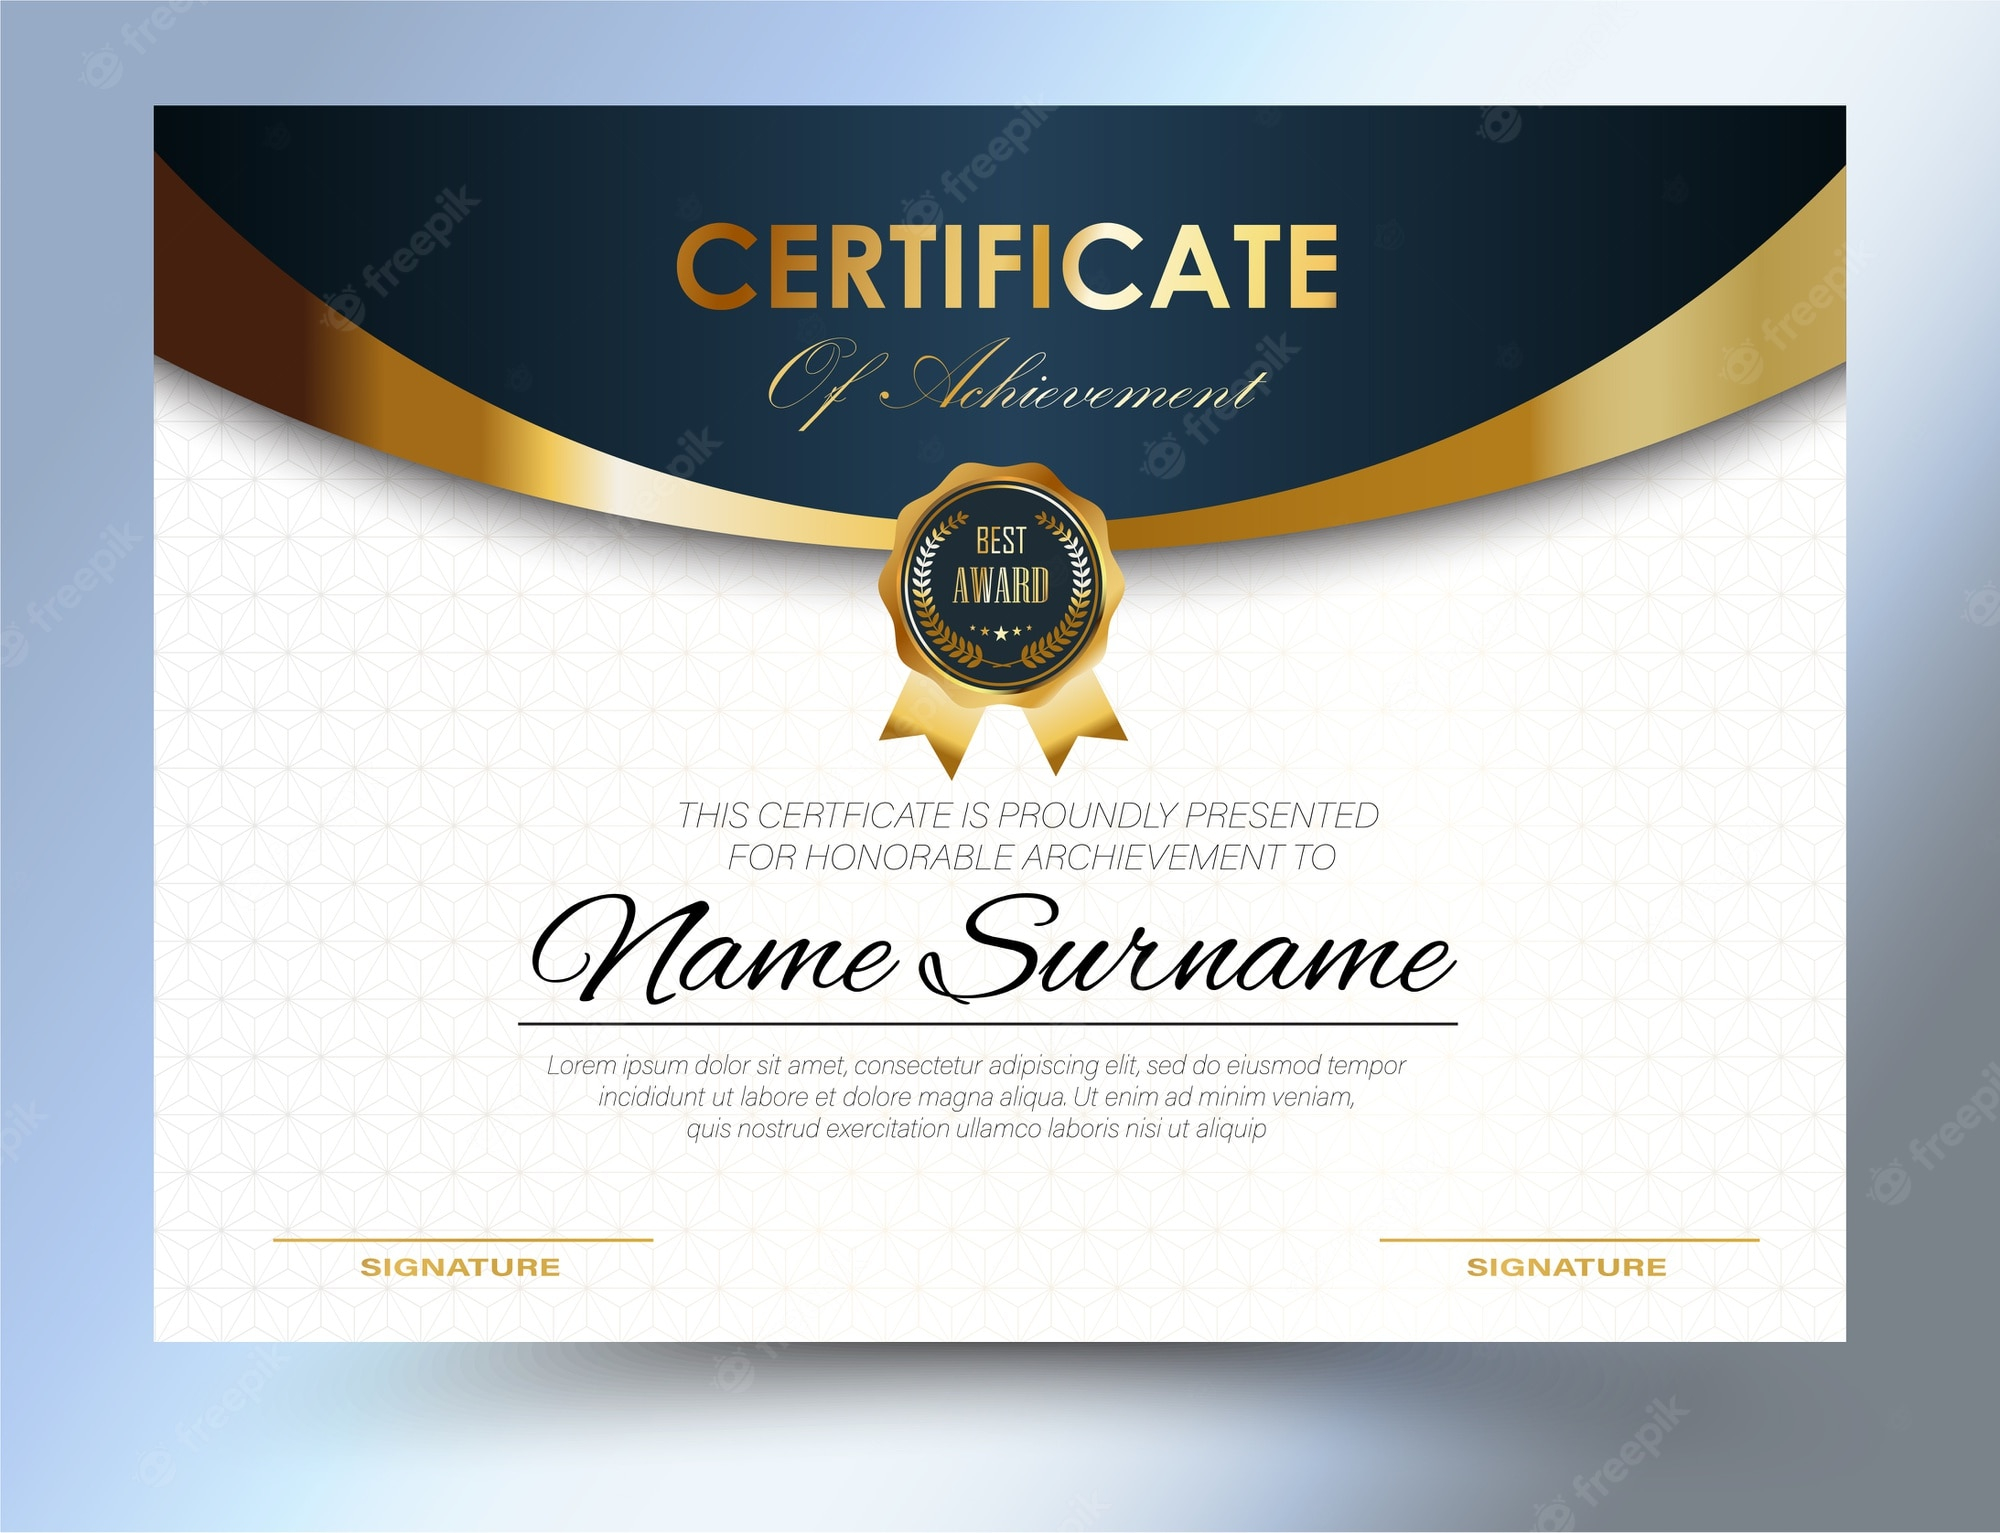 Premium Vector  Certificate template design a10 size Regarding Certificate Template Size